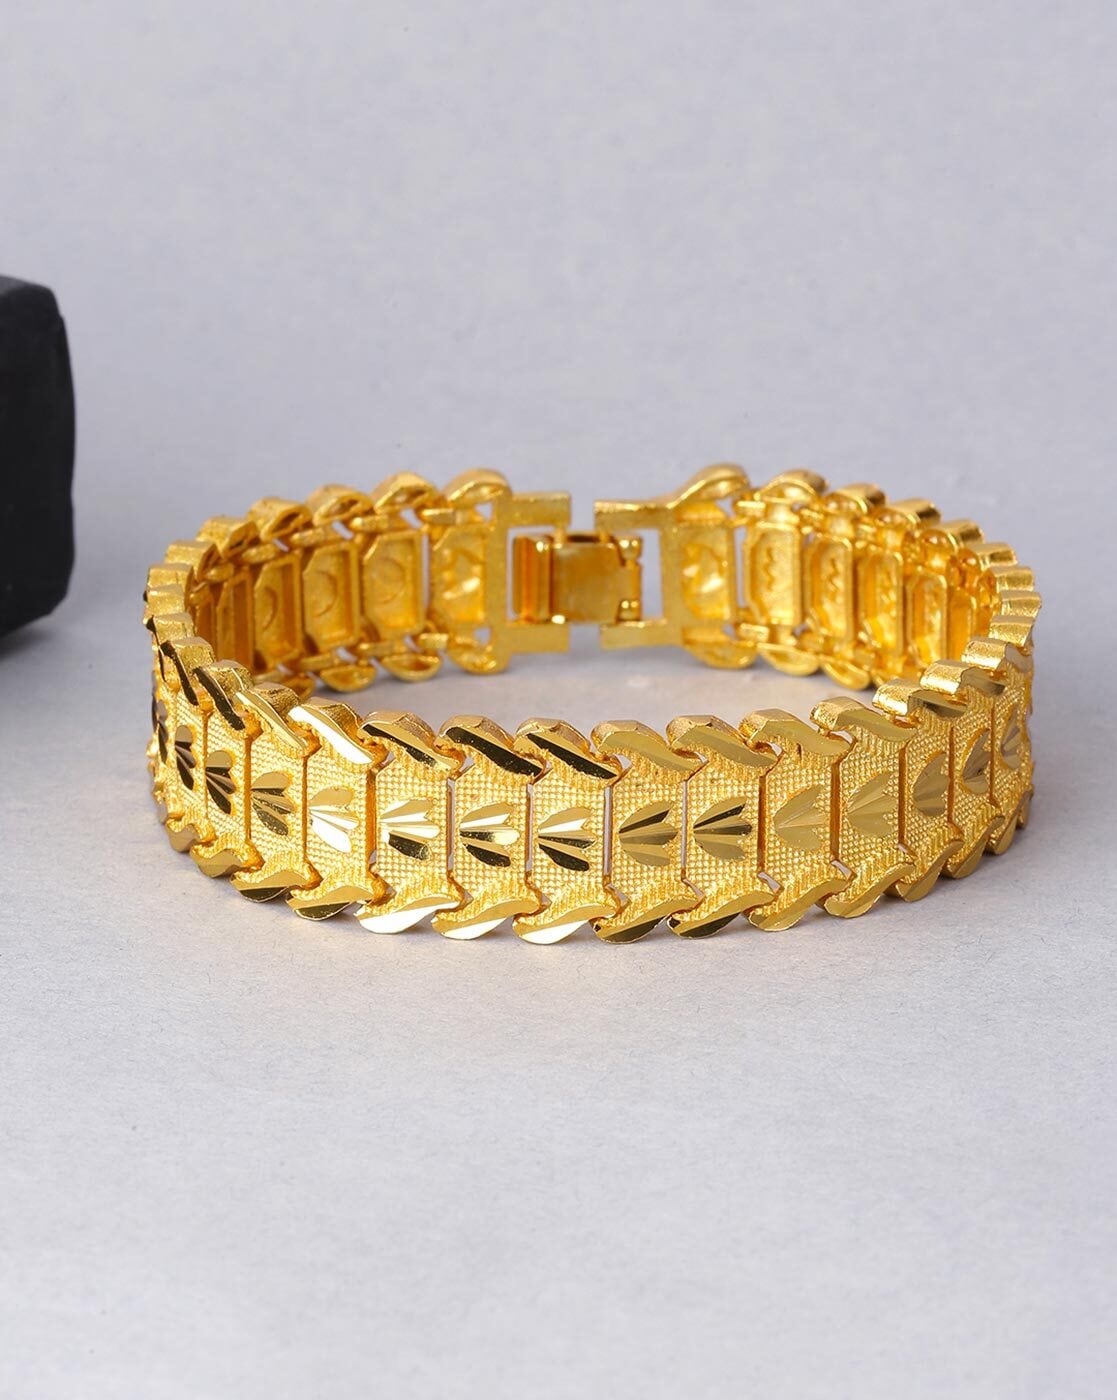 chickickin boutique | Jewelry | Gorgeous 24k Gold Bracelet | Poshmark